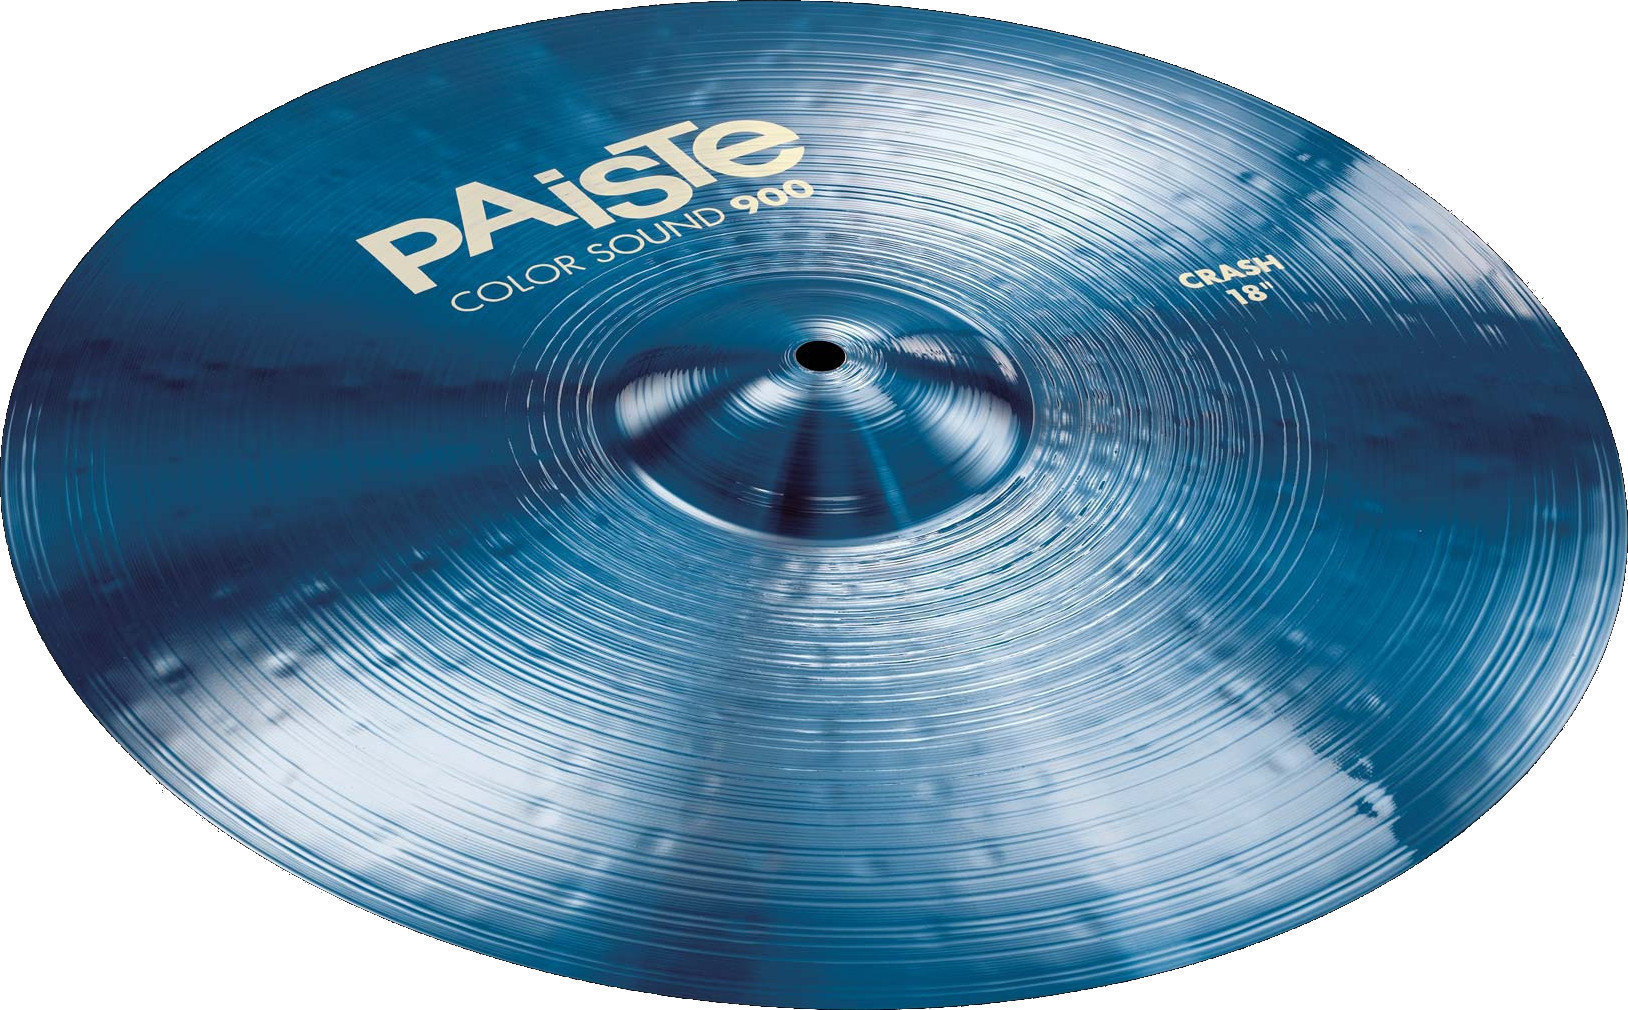 Crash Cymbal Paiste Color Sound 900 Crash Cymbal 17" Blue